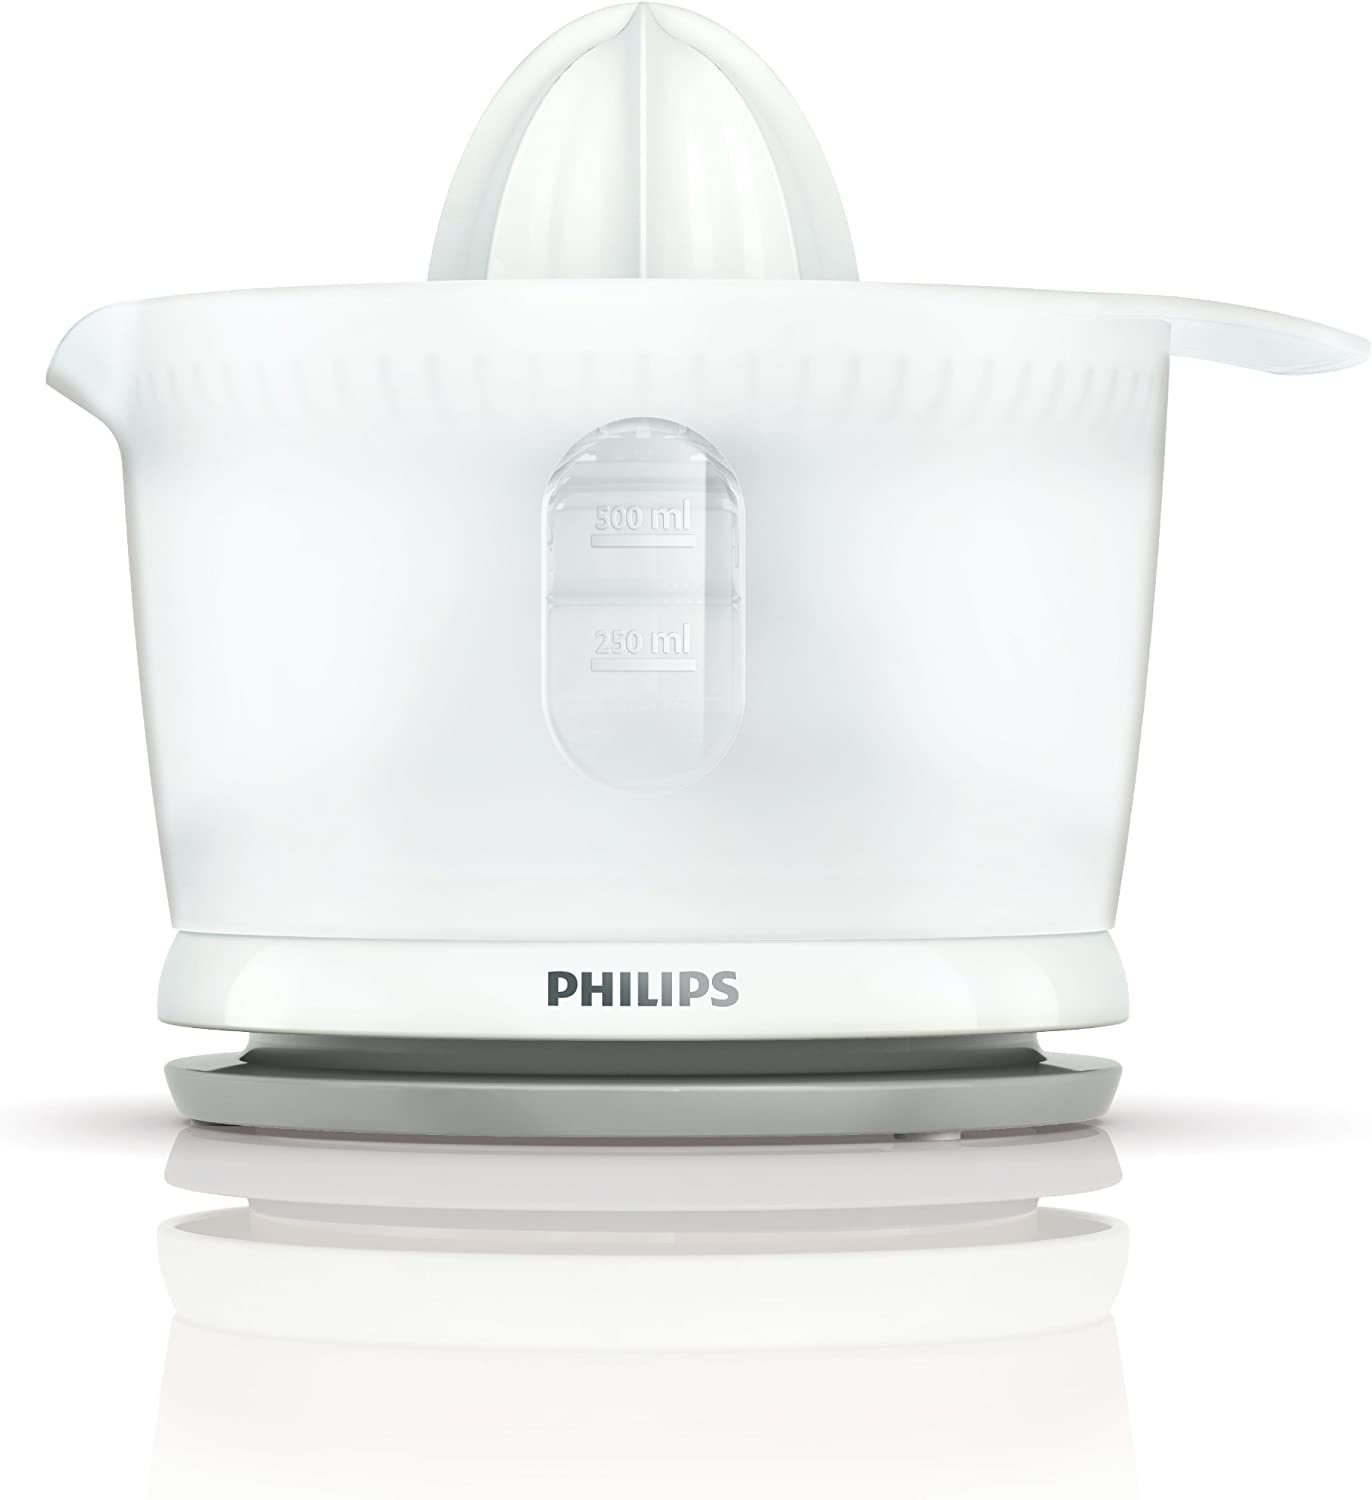 آب مرکبات گیری فیلیپس مدل Philips HR2738/00 - ارسال ۱۰ الی ۱۵ روز کاری